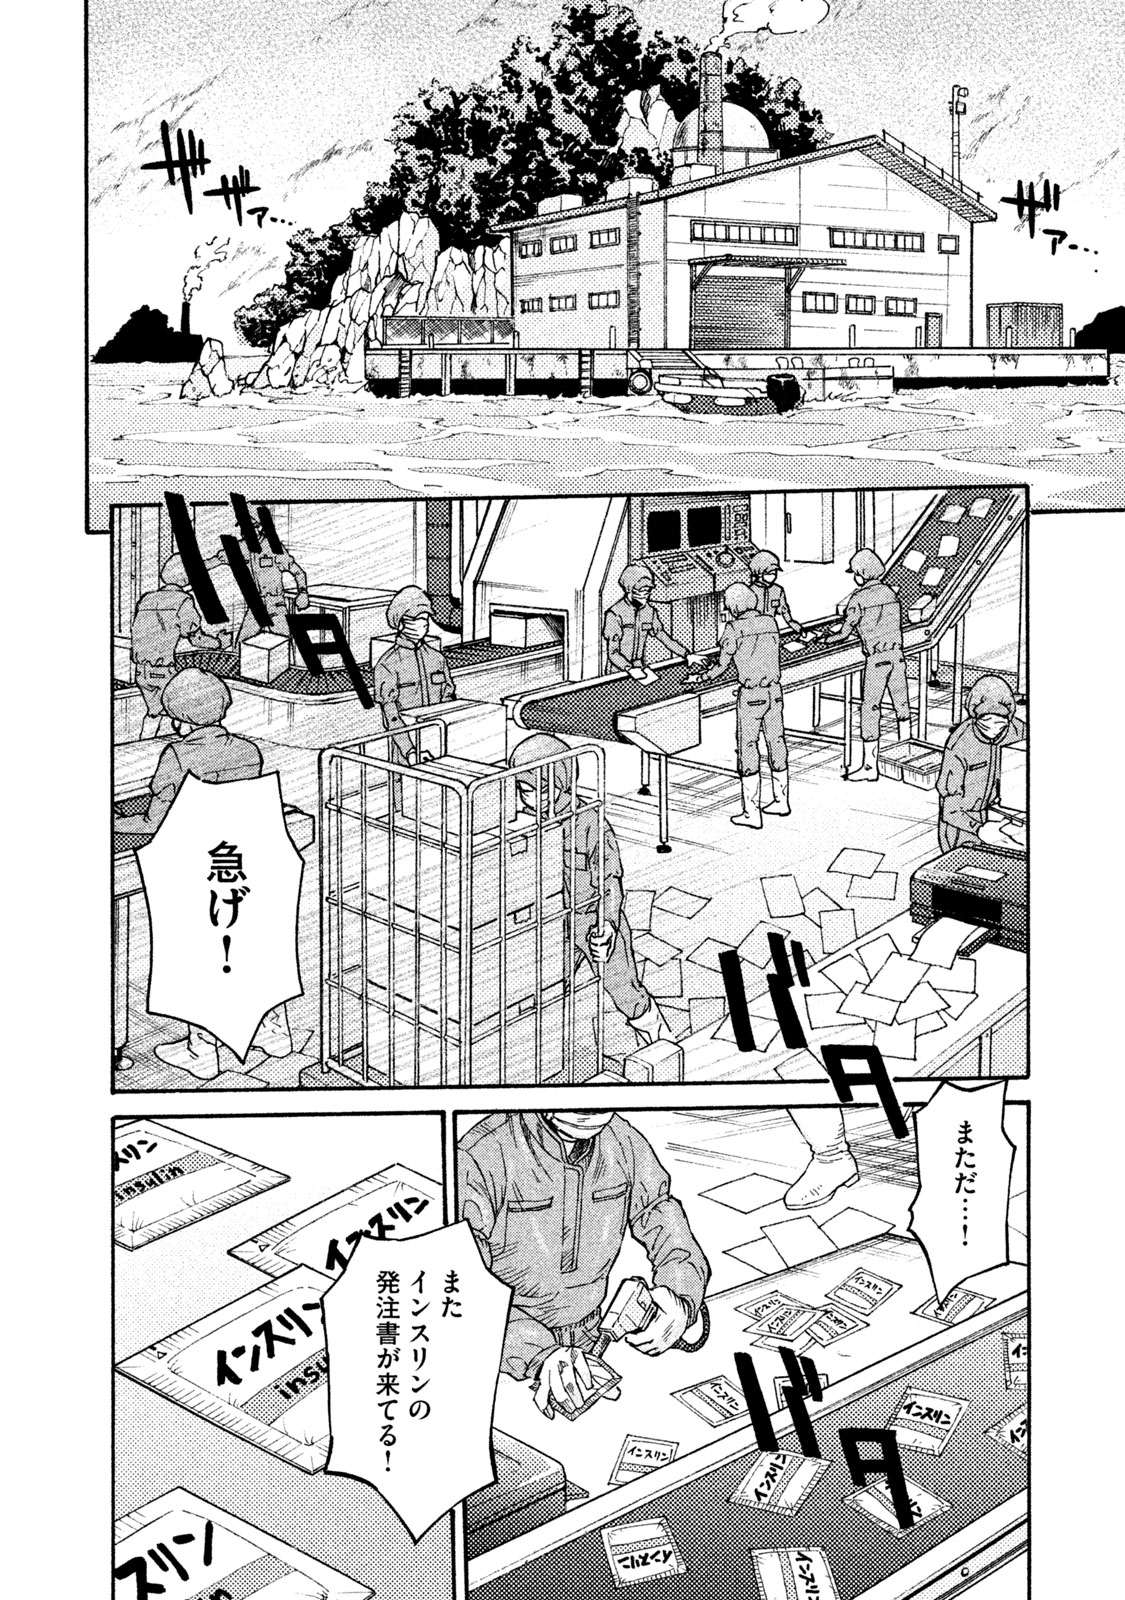 Hataraku Saibou BLACK - Chapter 18 - Page 6